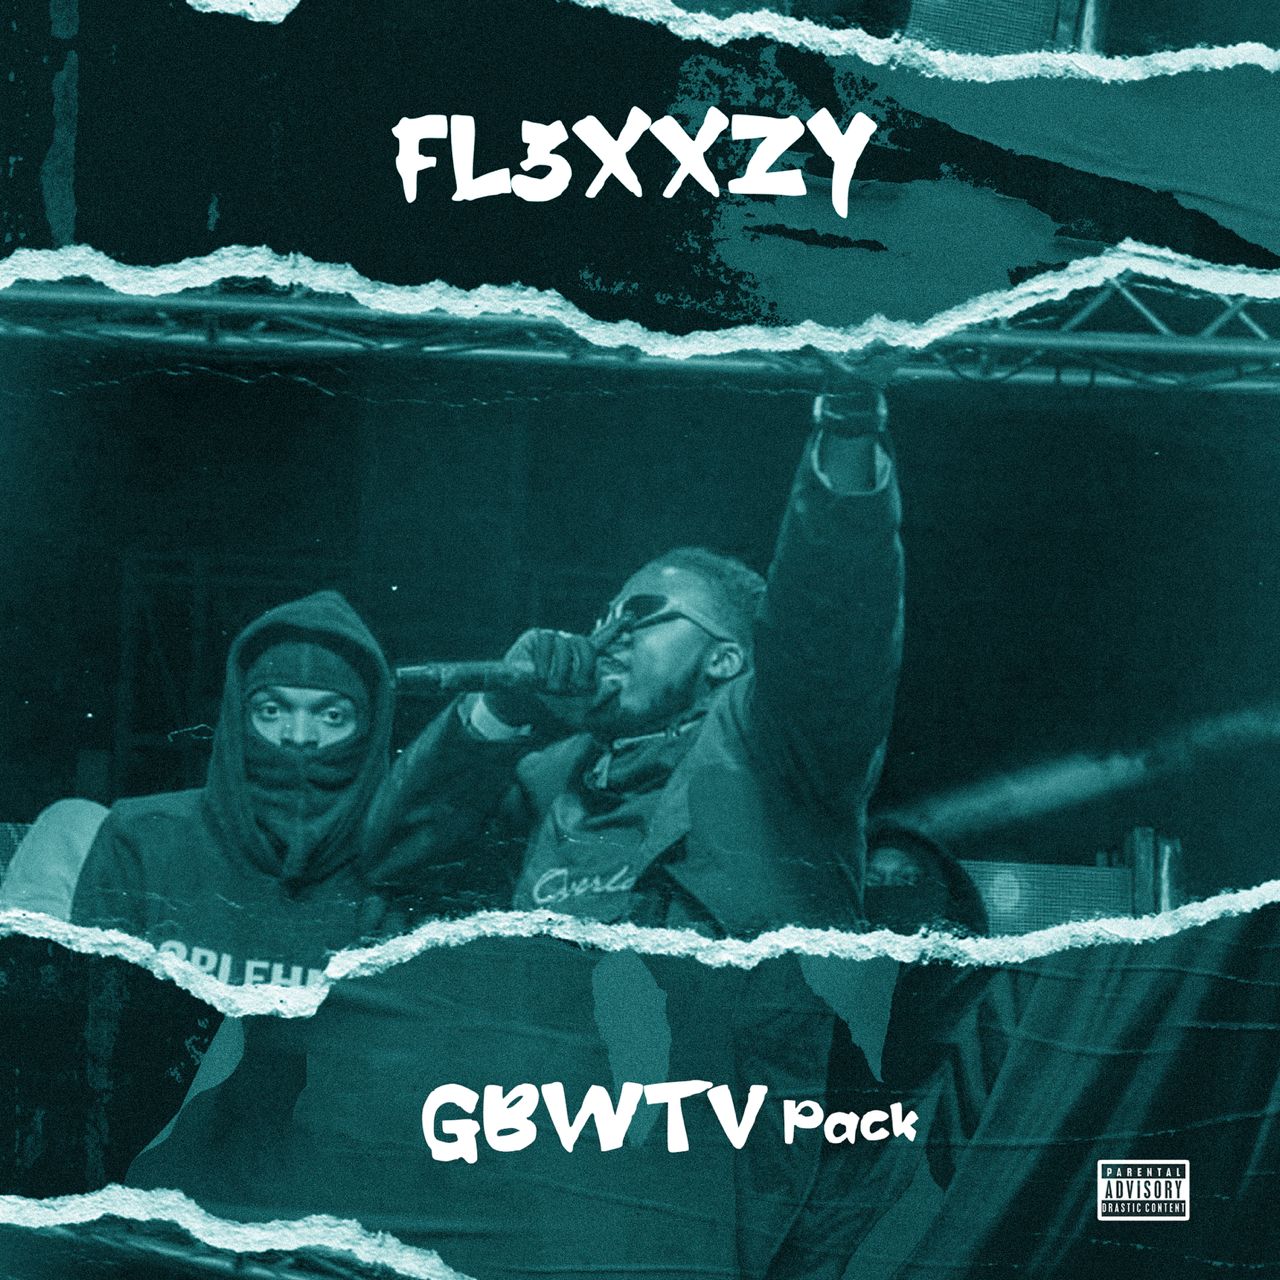 Fl3xxzy - GBWTV Pack